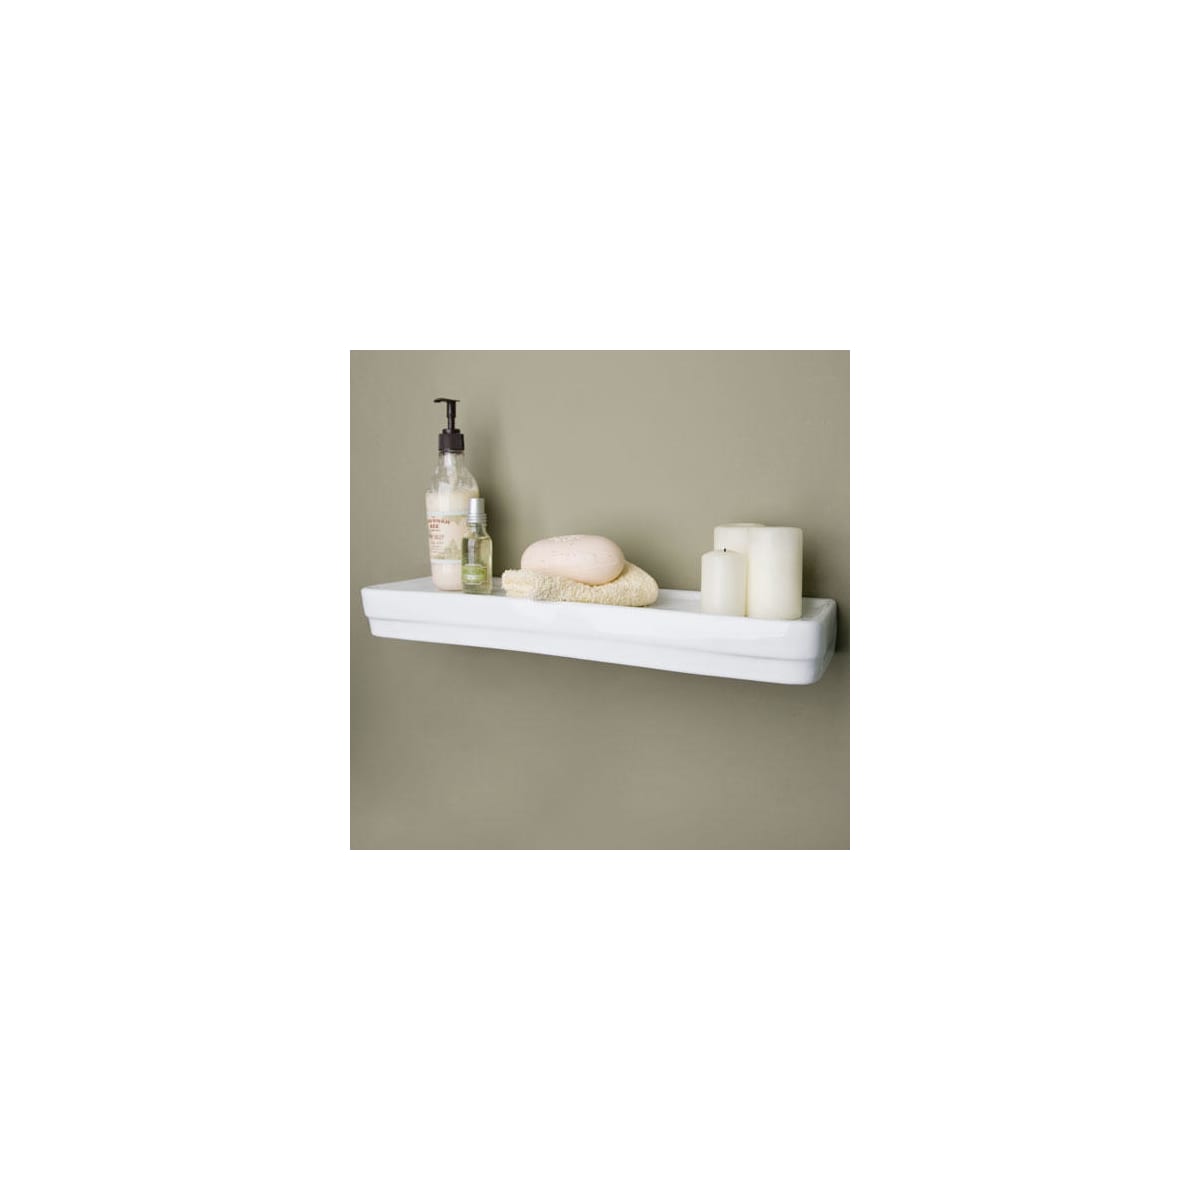  Signature Hardware 412404 Wulan 21-3/4 Teak Wood Bathroom Shelf  : Tools & Home Improvement